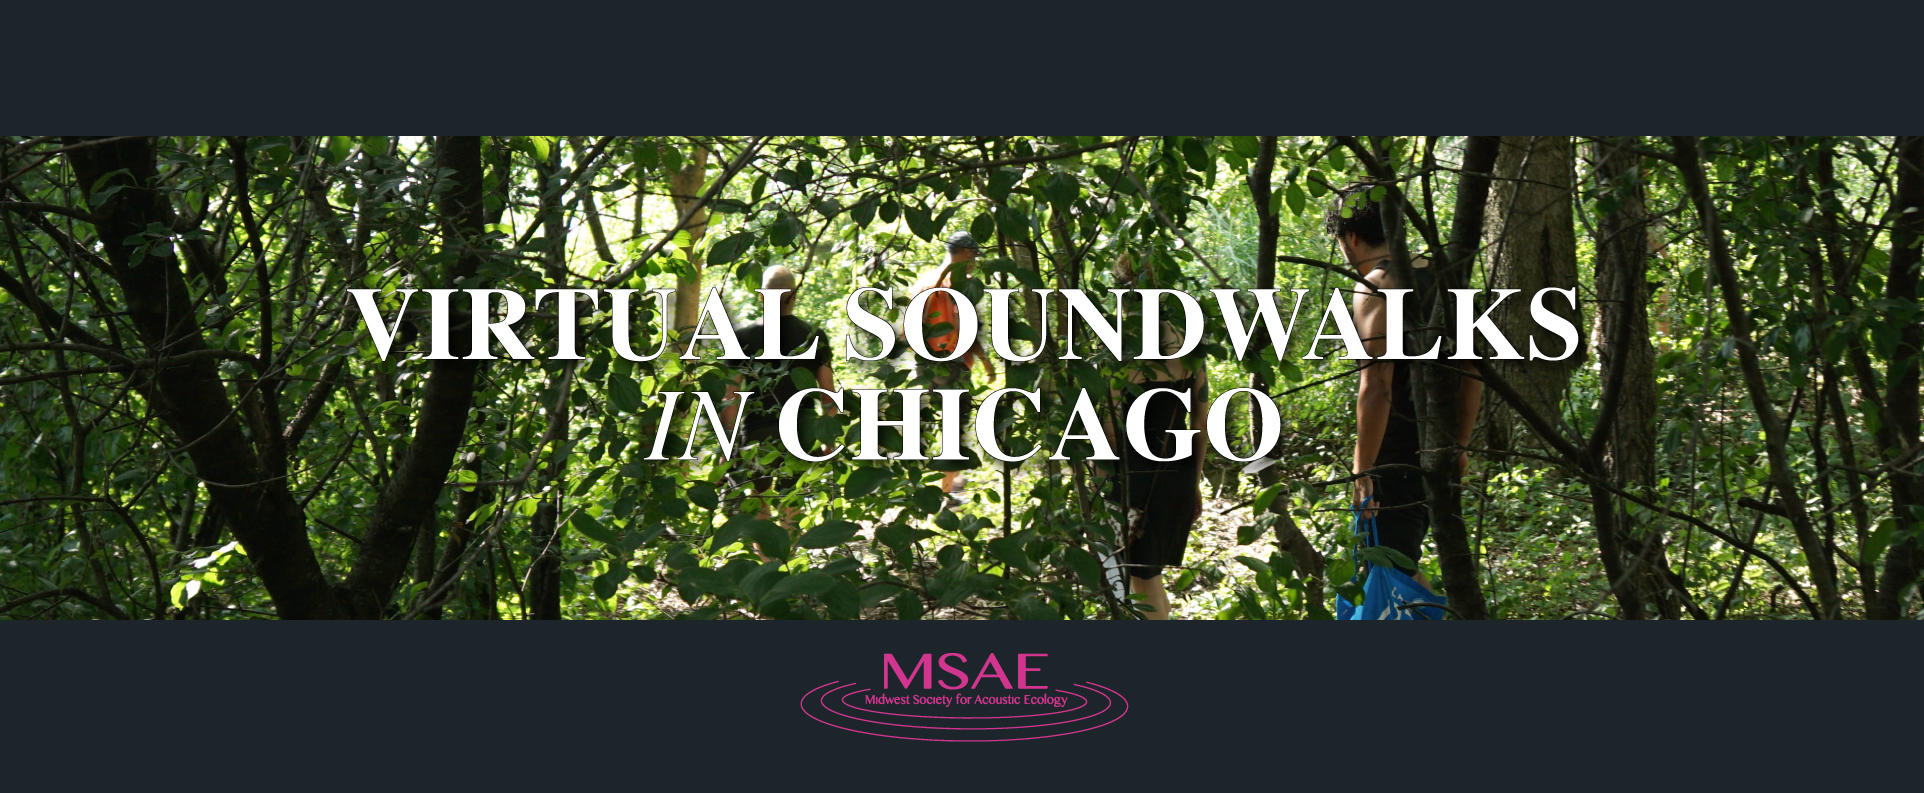 Virtual Soundwalks In Chicago Parks